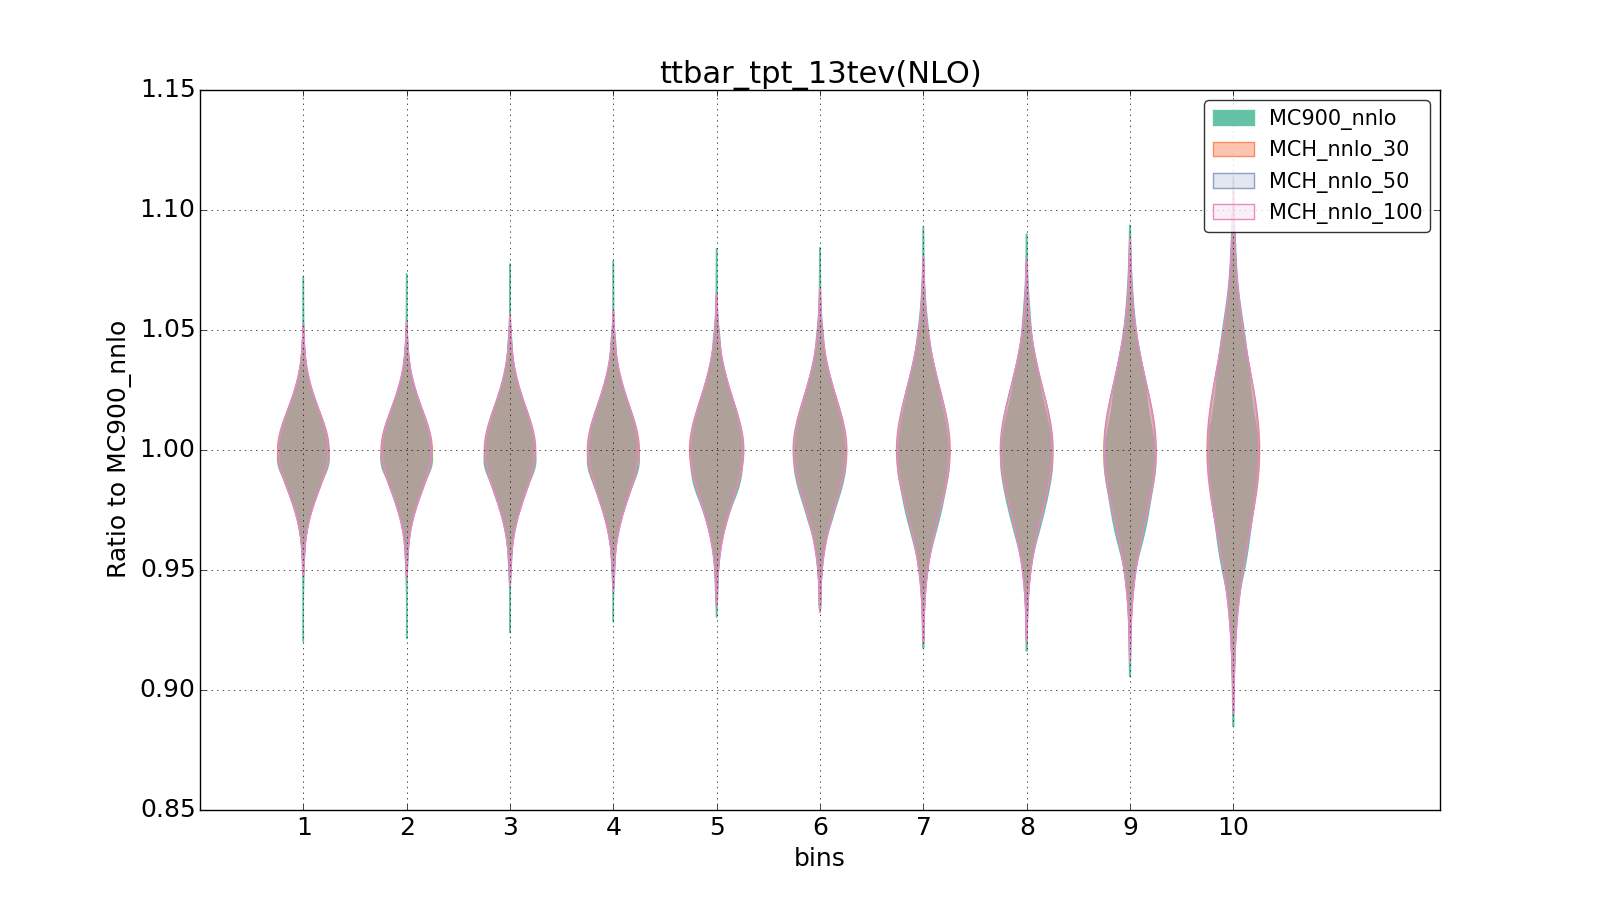 figure plots/pheno_new/NNLO/violinplot_ttbar_tpt_13tev(NLO).png